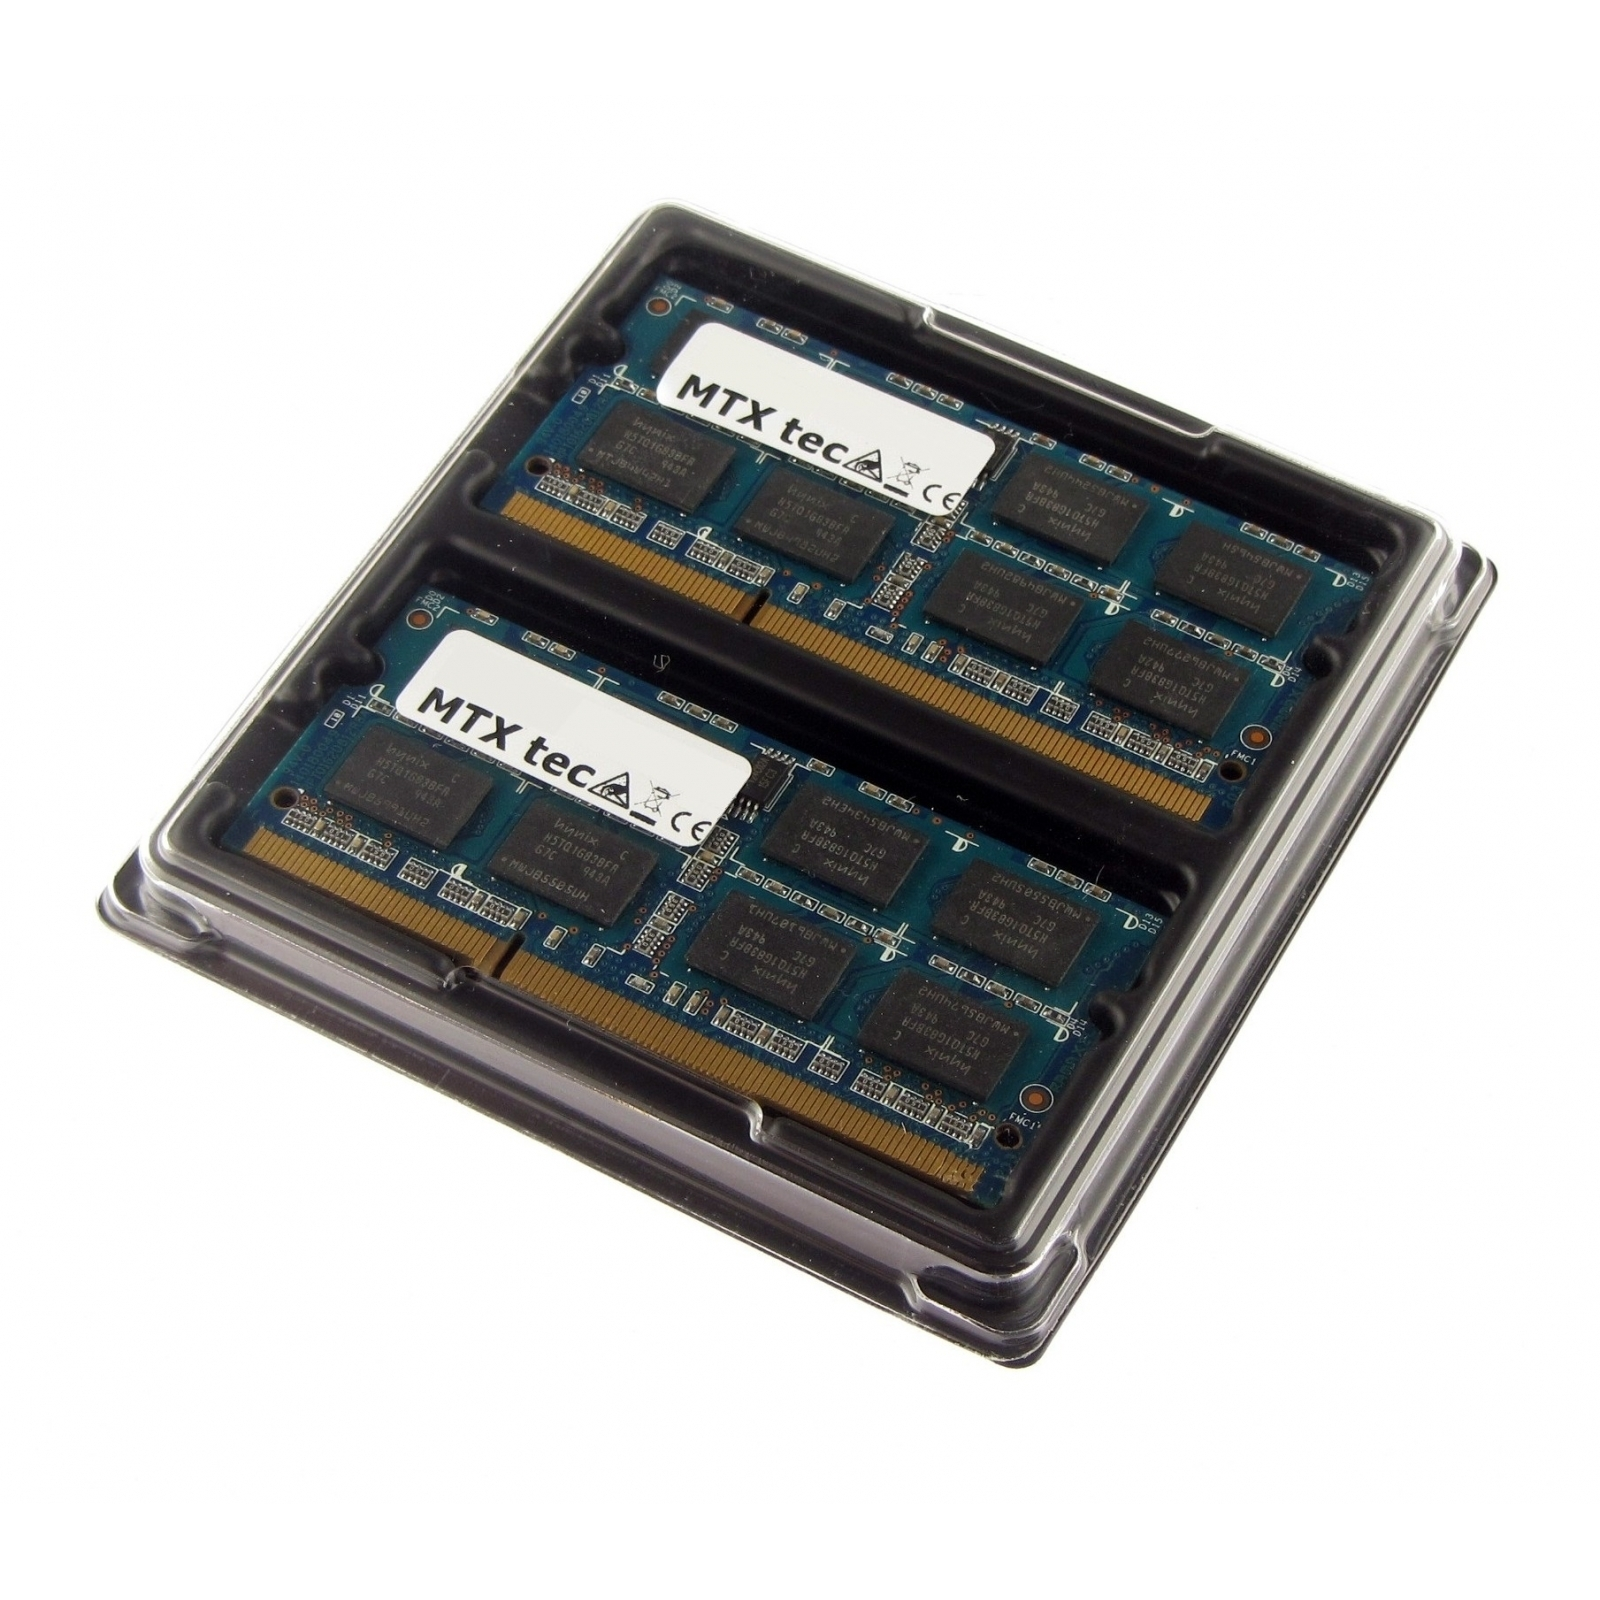 MTXTEC 8GB DDR3 PC3-14900, Kit 204 Pin, Laptop-Speicher 1866MHz 2x 4GB GB DDR3L SODIMM 1.35V DDR3 Notebook-Speicher DDR3 RAM 4